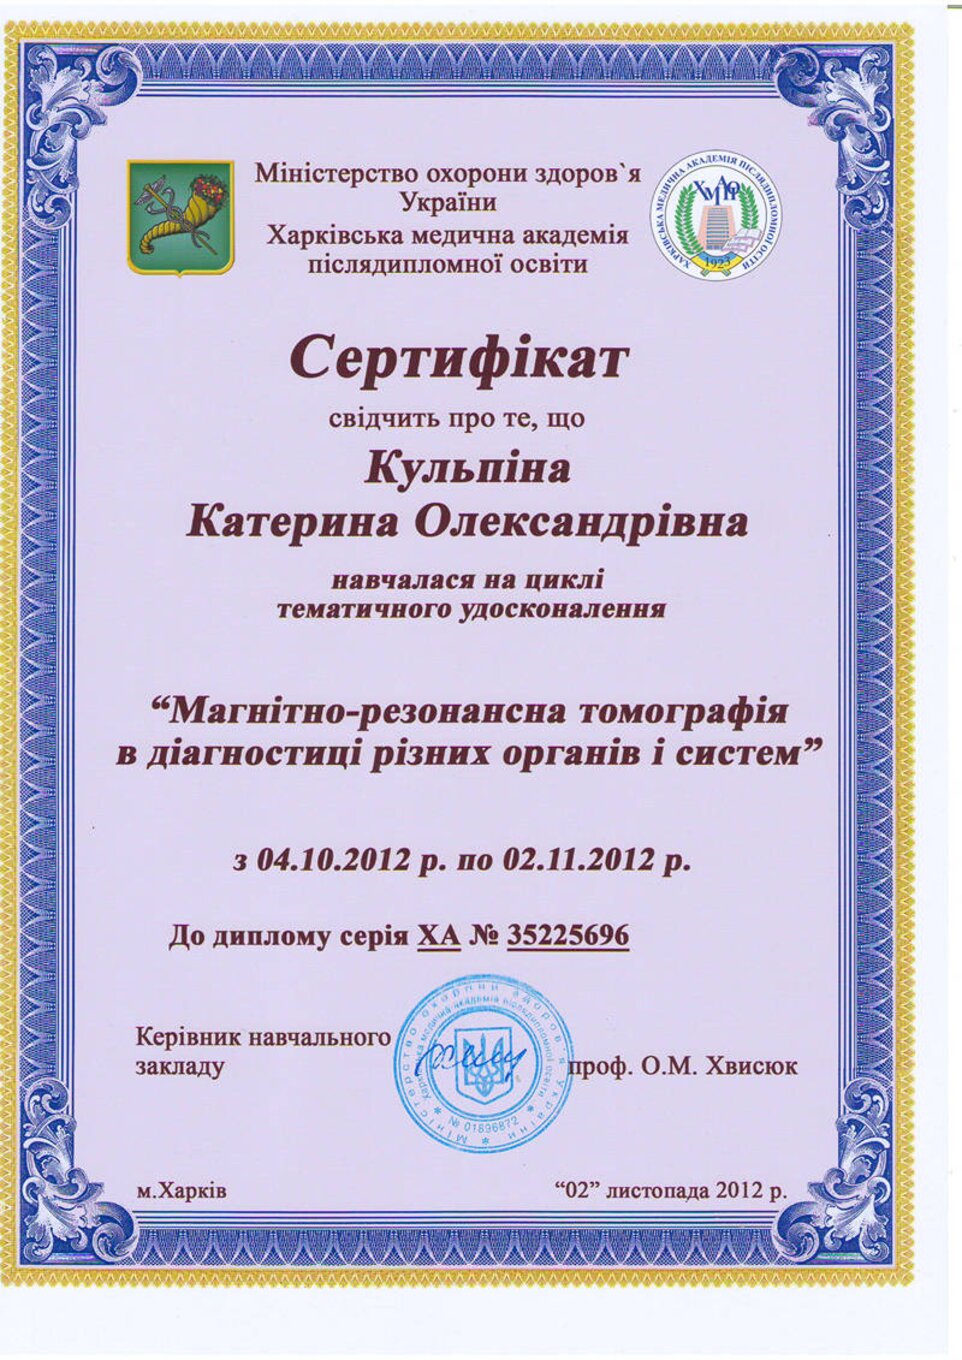 certificates/kulpina-katerina-oleksandrivna/hemomedika-cert-kulpina-kursy_mrt_khmapo_2012_oktyabr-.jpg